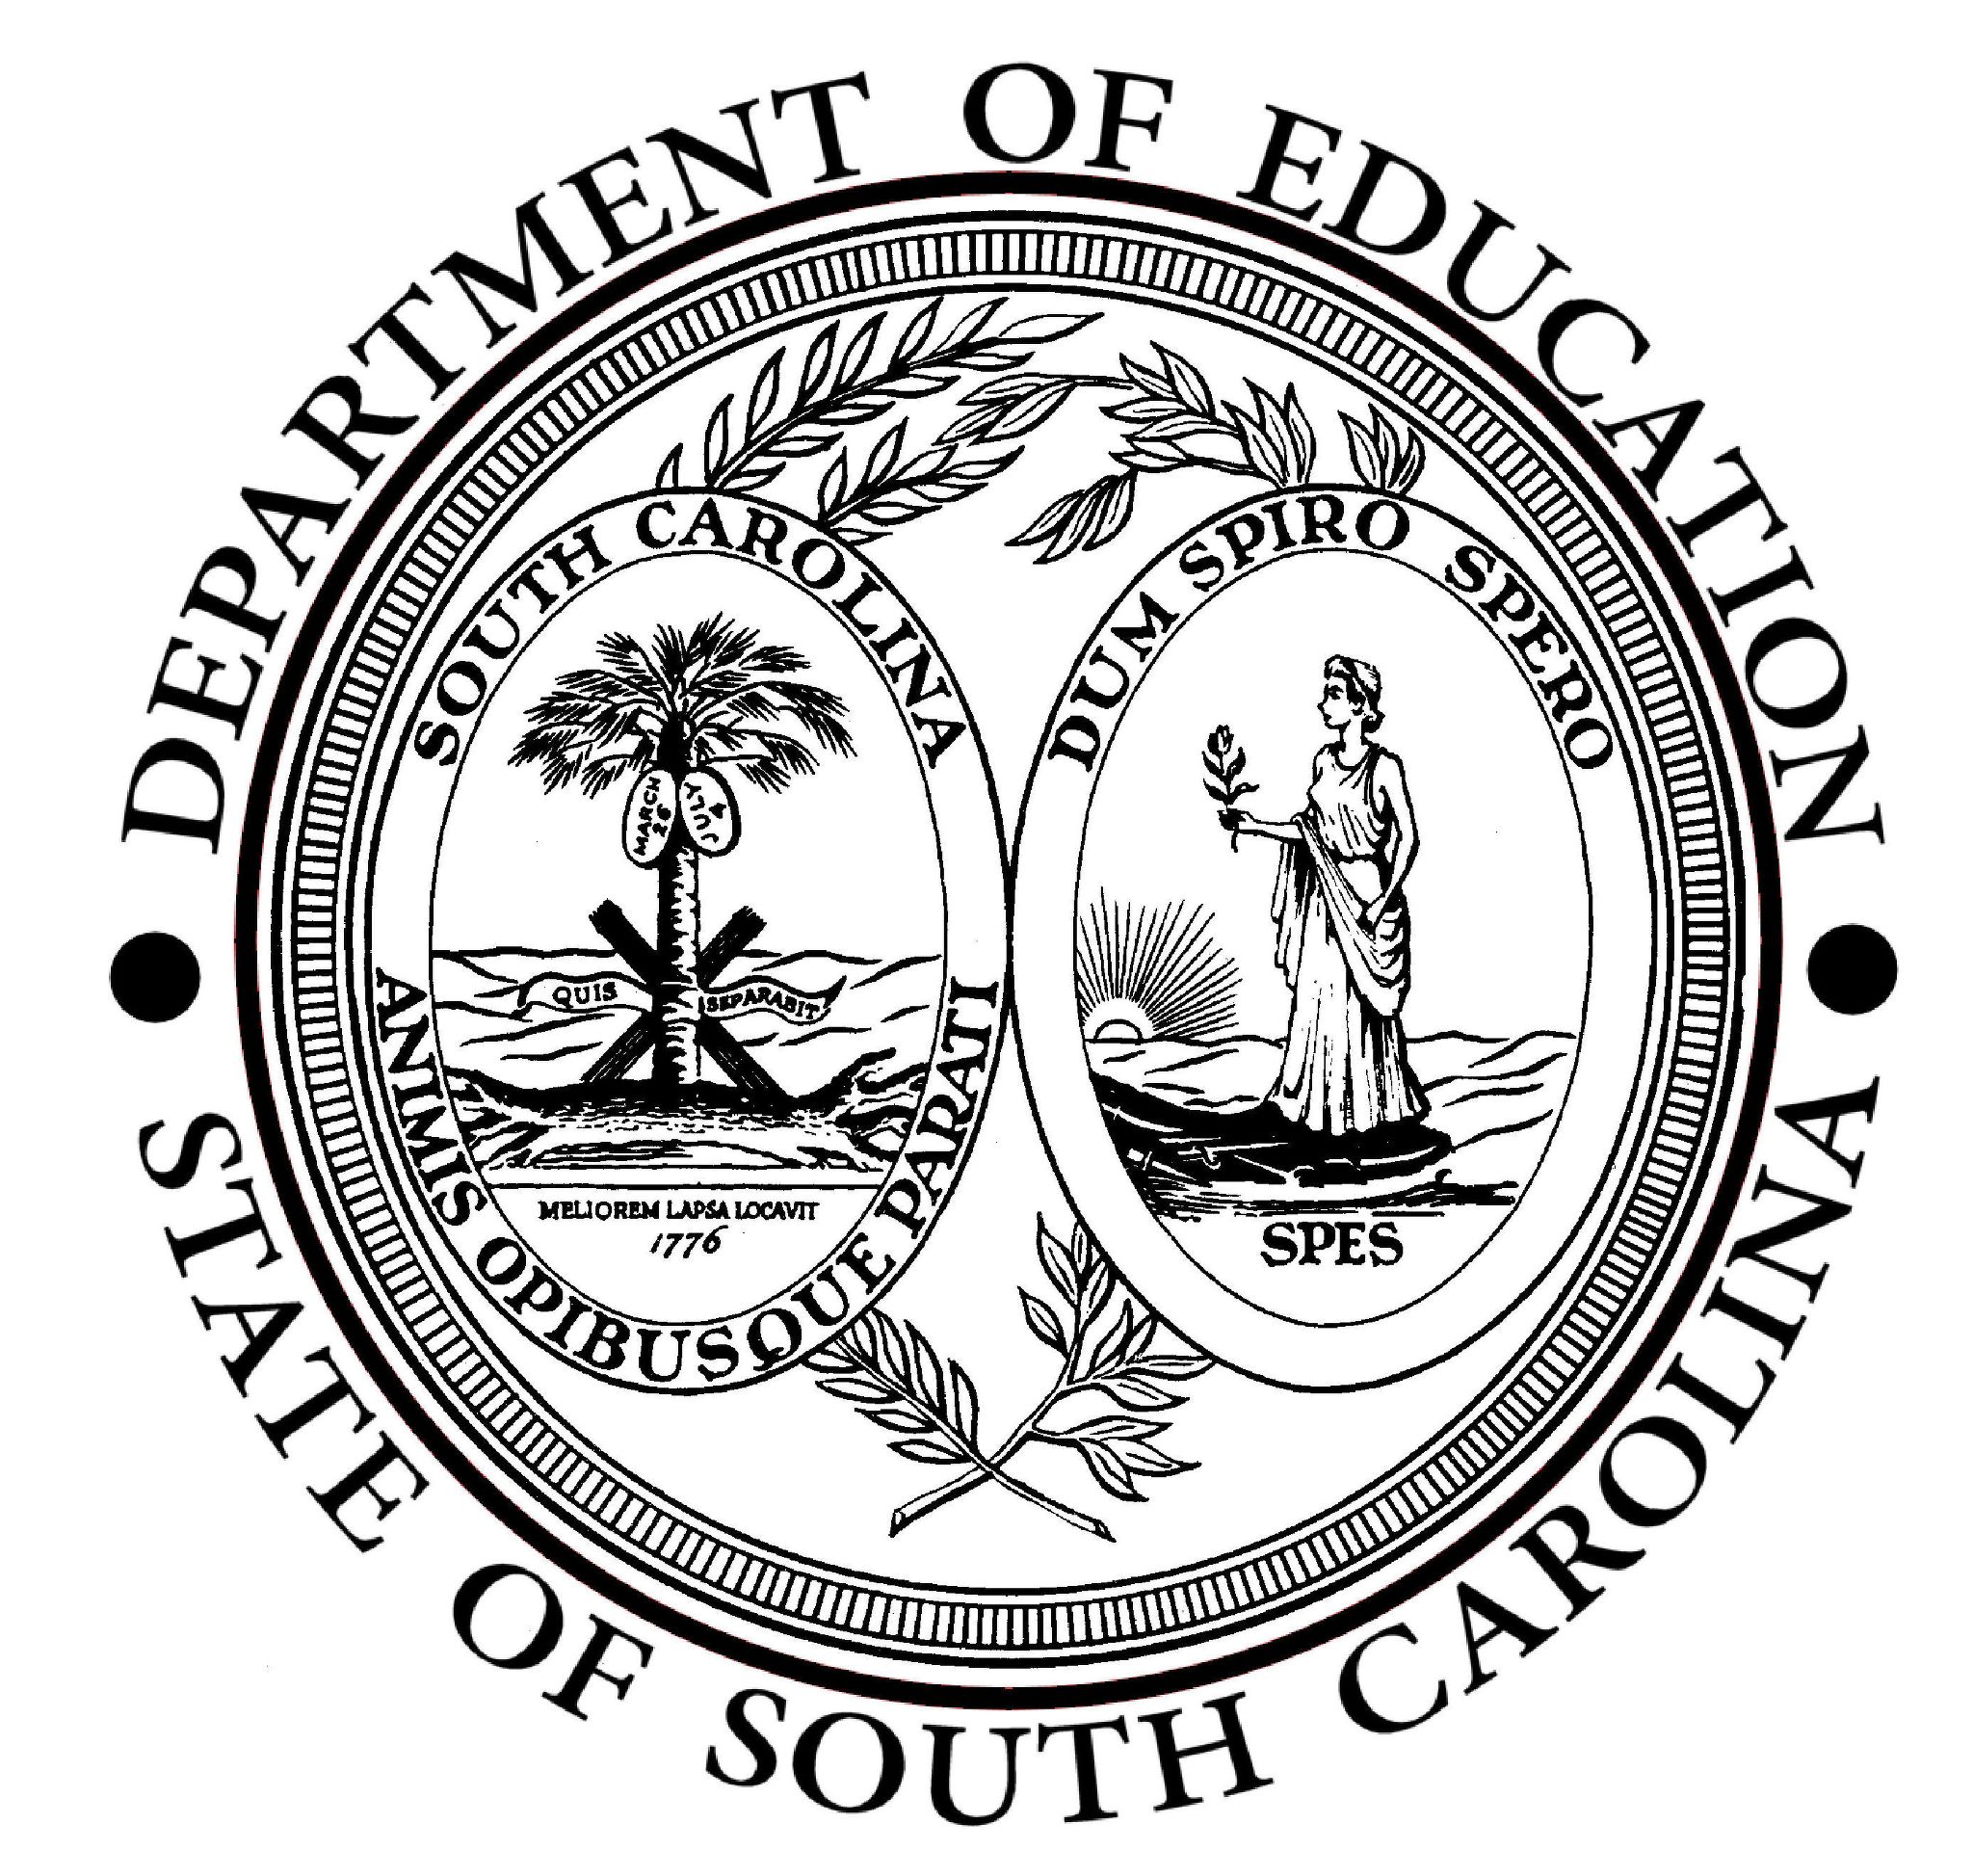 SC Department of Education logo